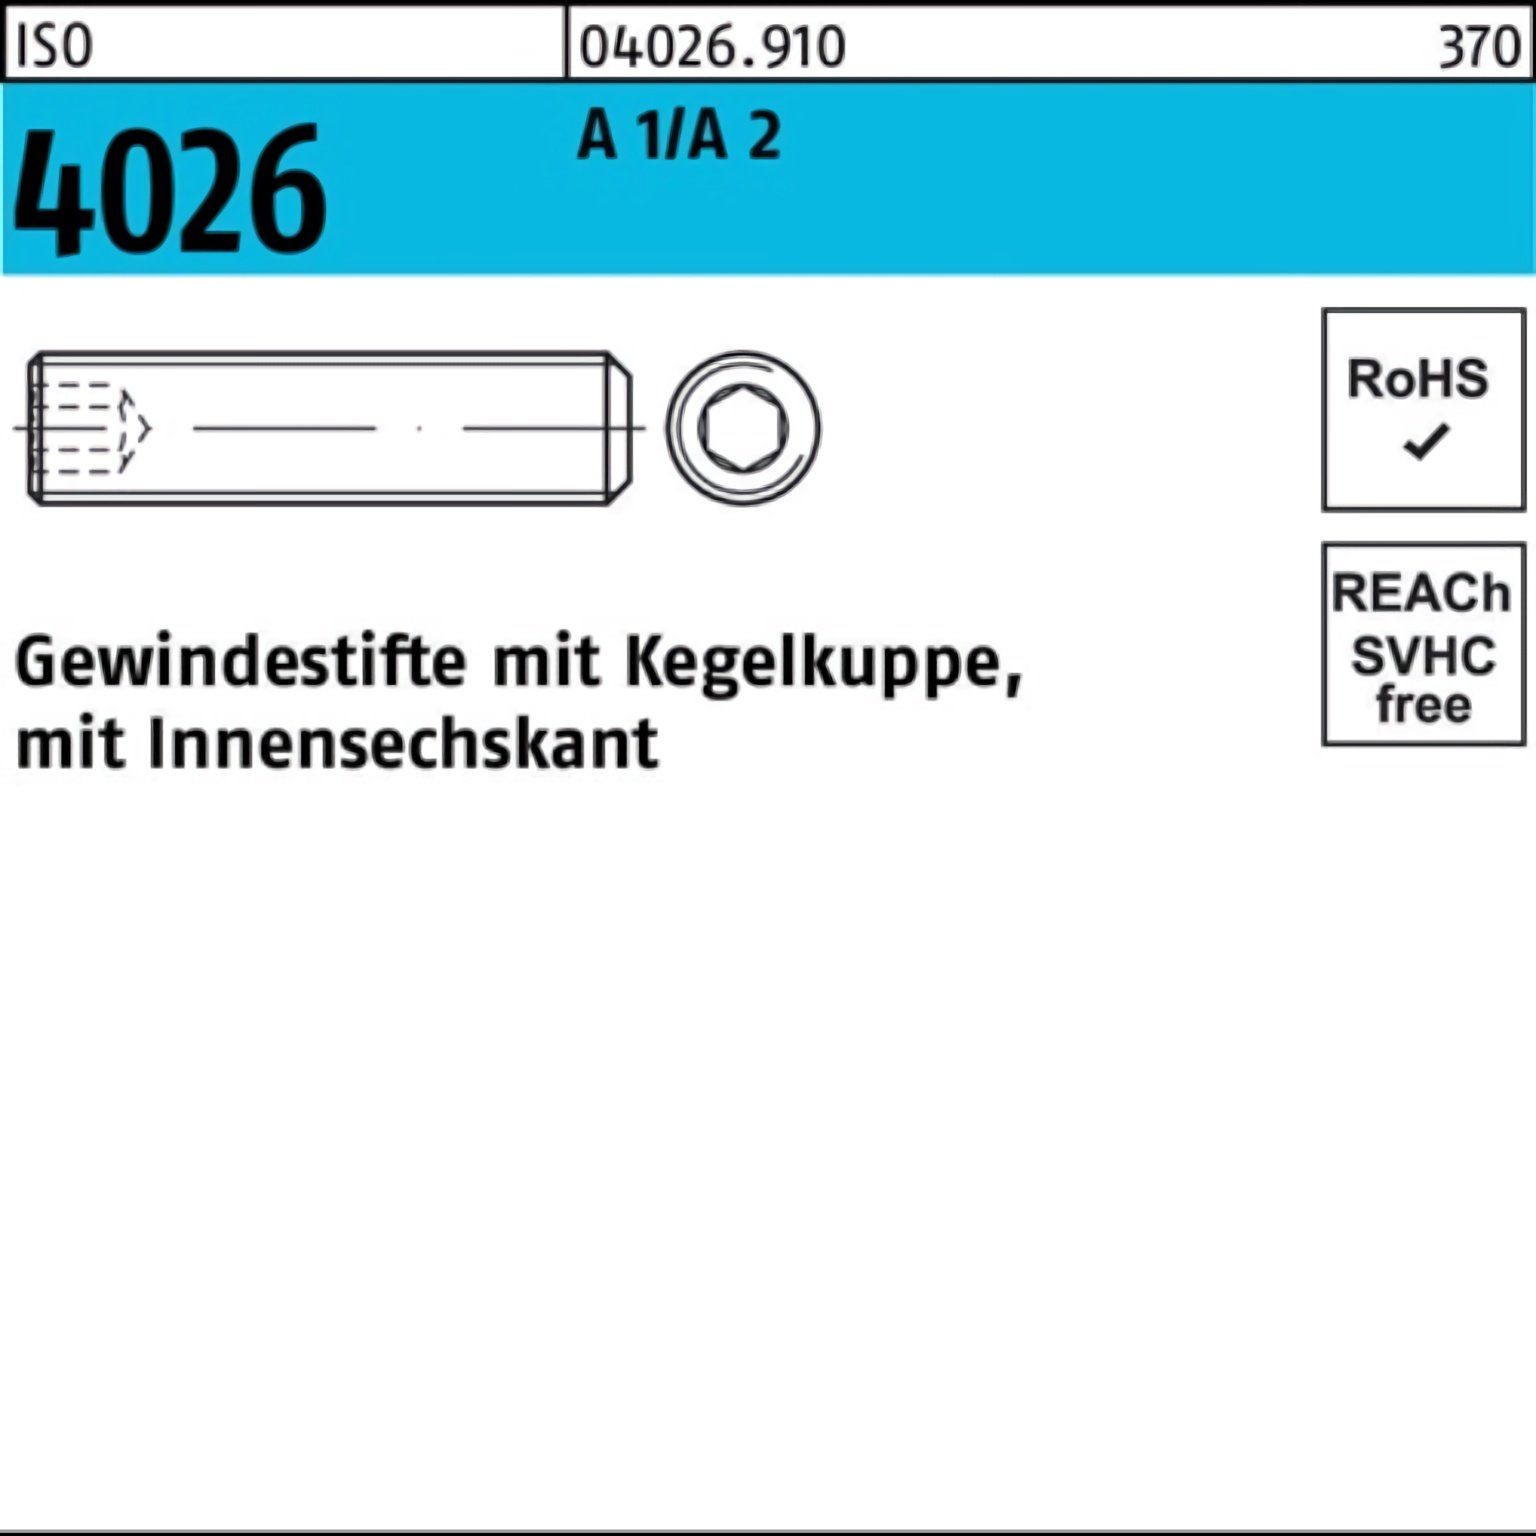 A 4026 Pack ISO Kegelkuppe/Innen-6kt Gewindestift Reyher 1/A 2 2 Gewindebolzen 50 500er M2x